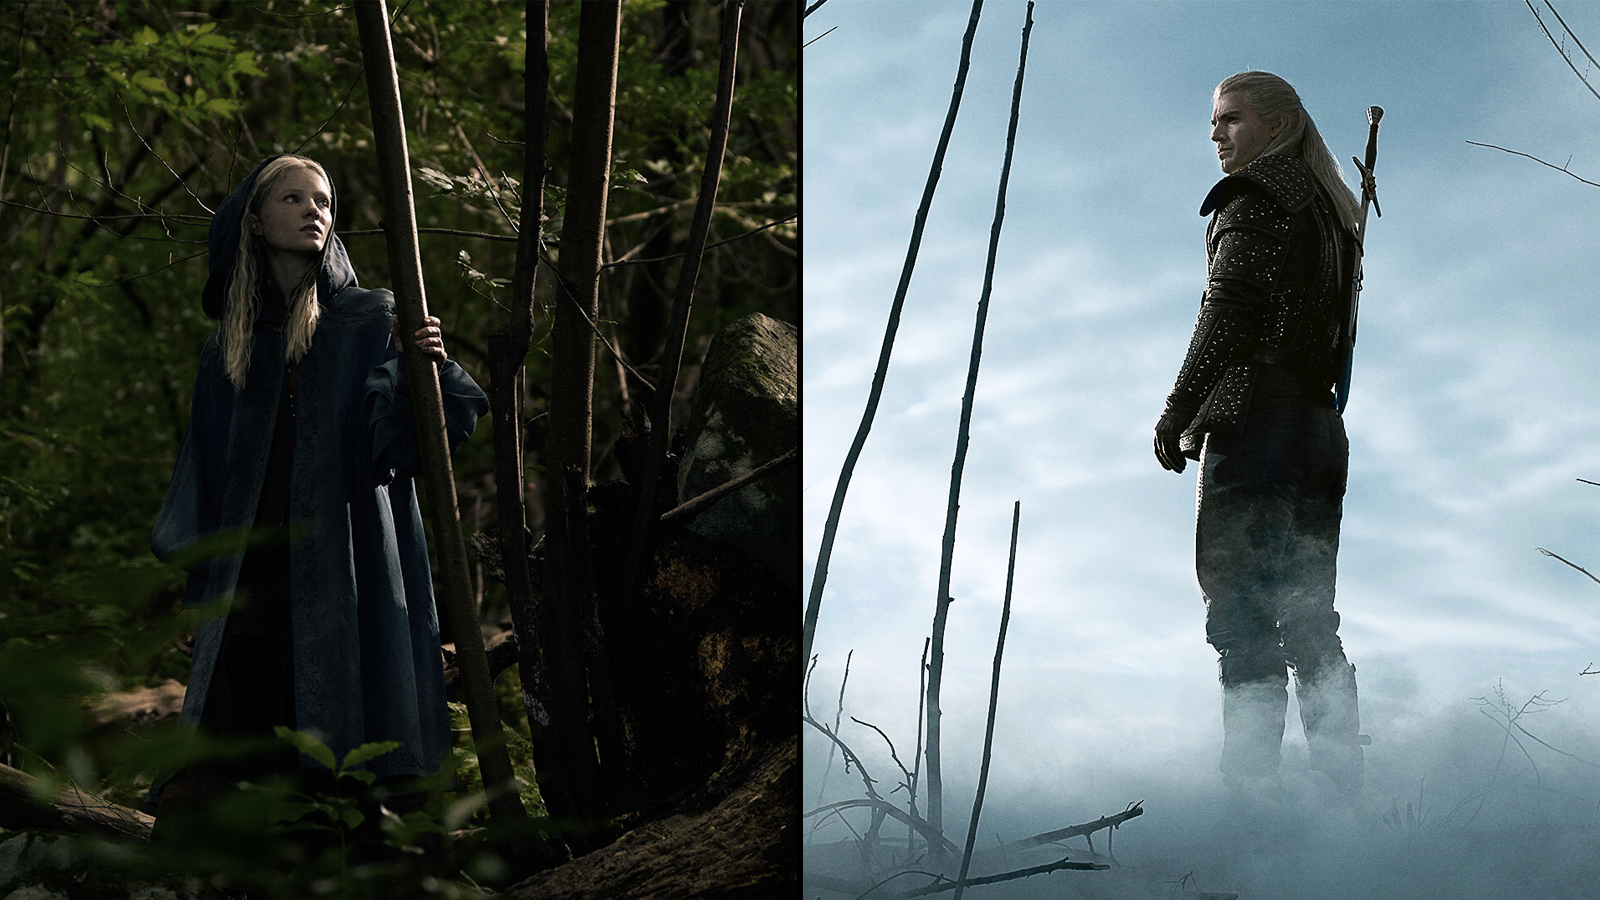 Dua karakter dari pertunjukan dalam gambar diam terpisah darinya; satu di hutan, satu di daerah berkabut